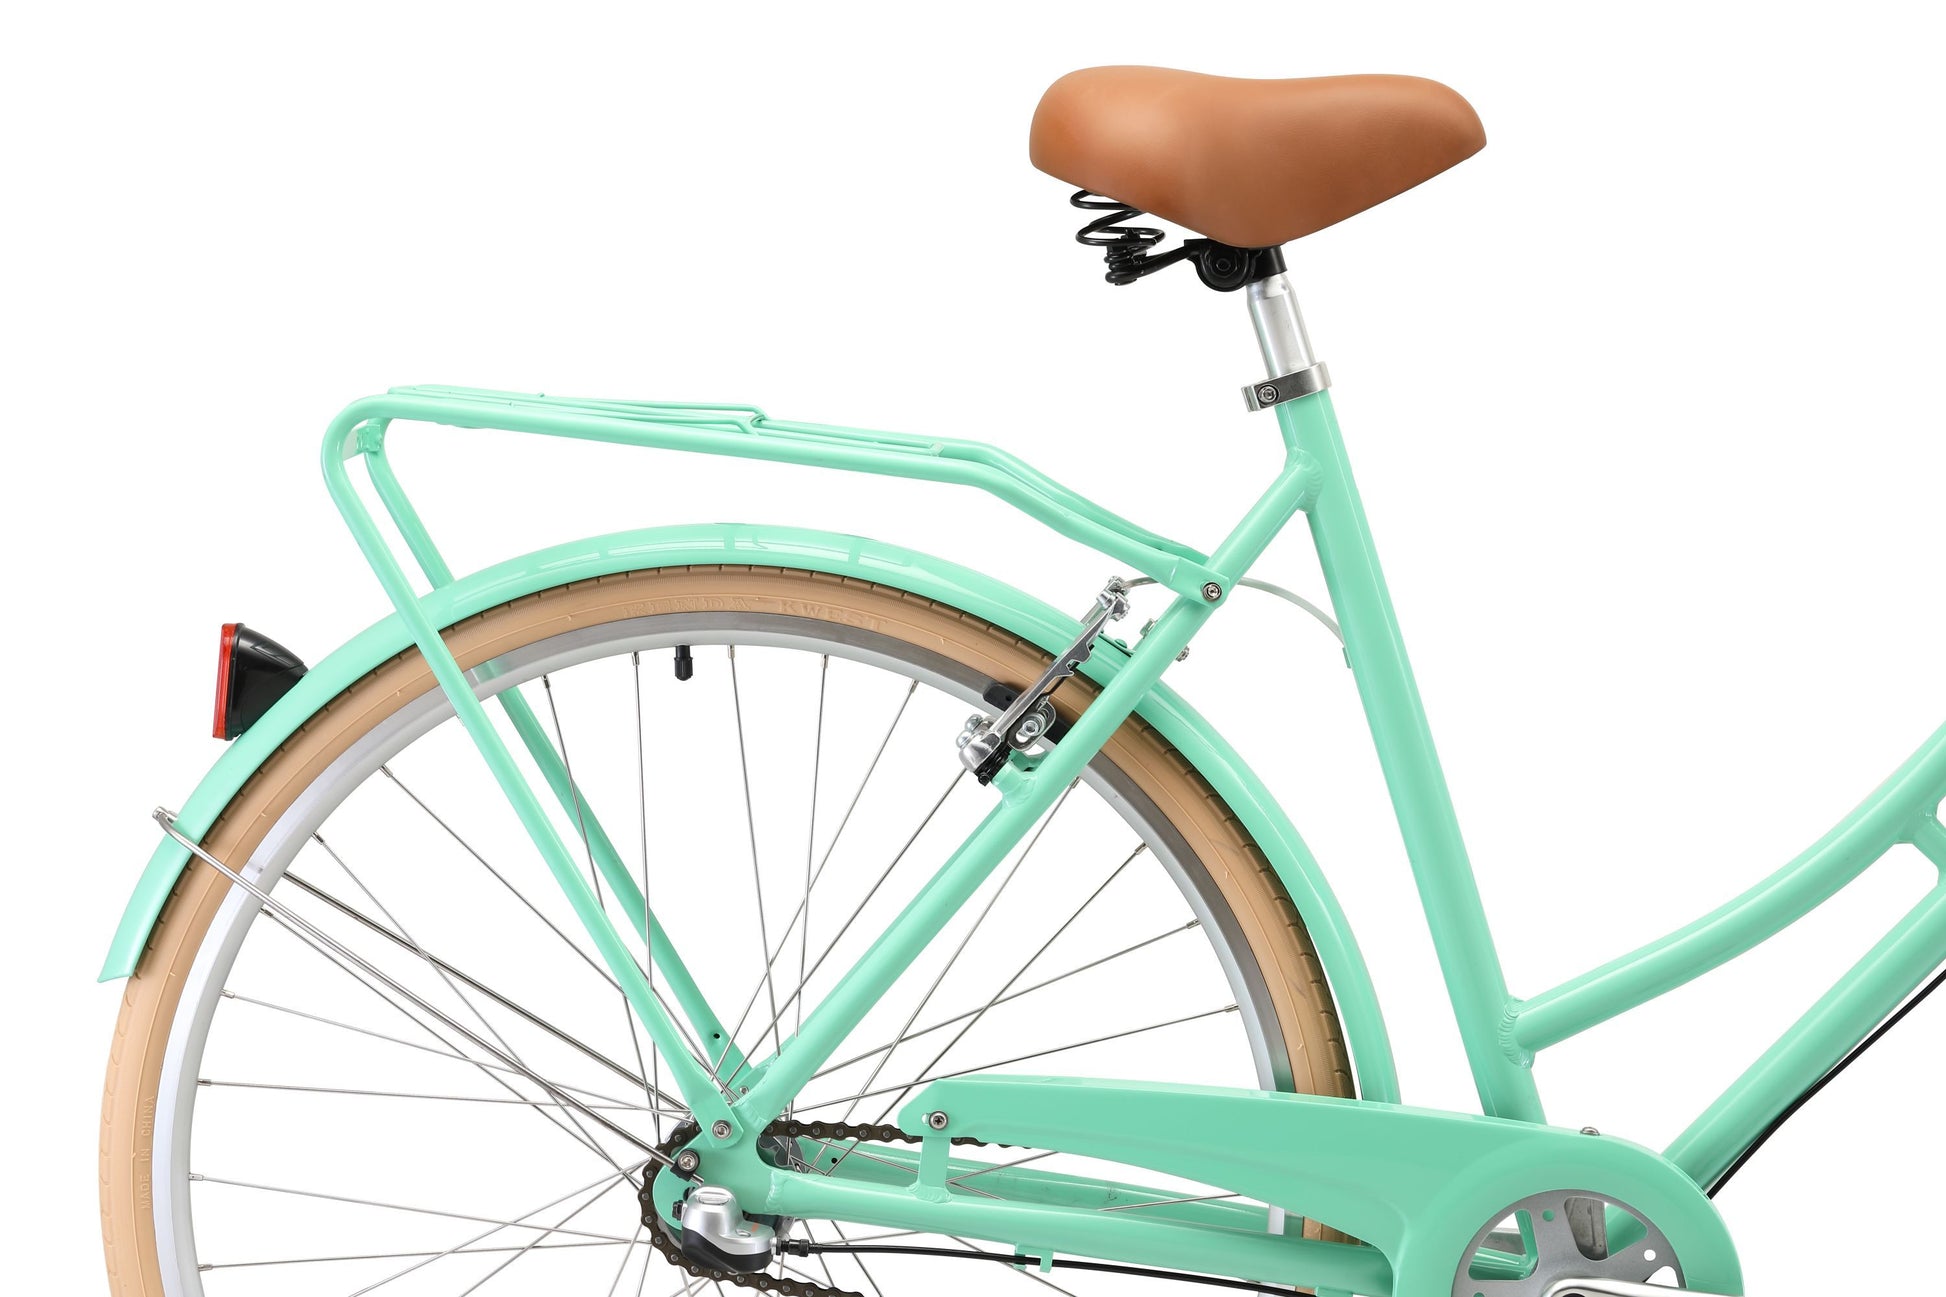 Ladies Deluxe Vintage Bike in Mint Green featuring rear pannier rack from Reid Cycles Australia